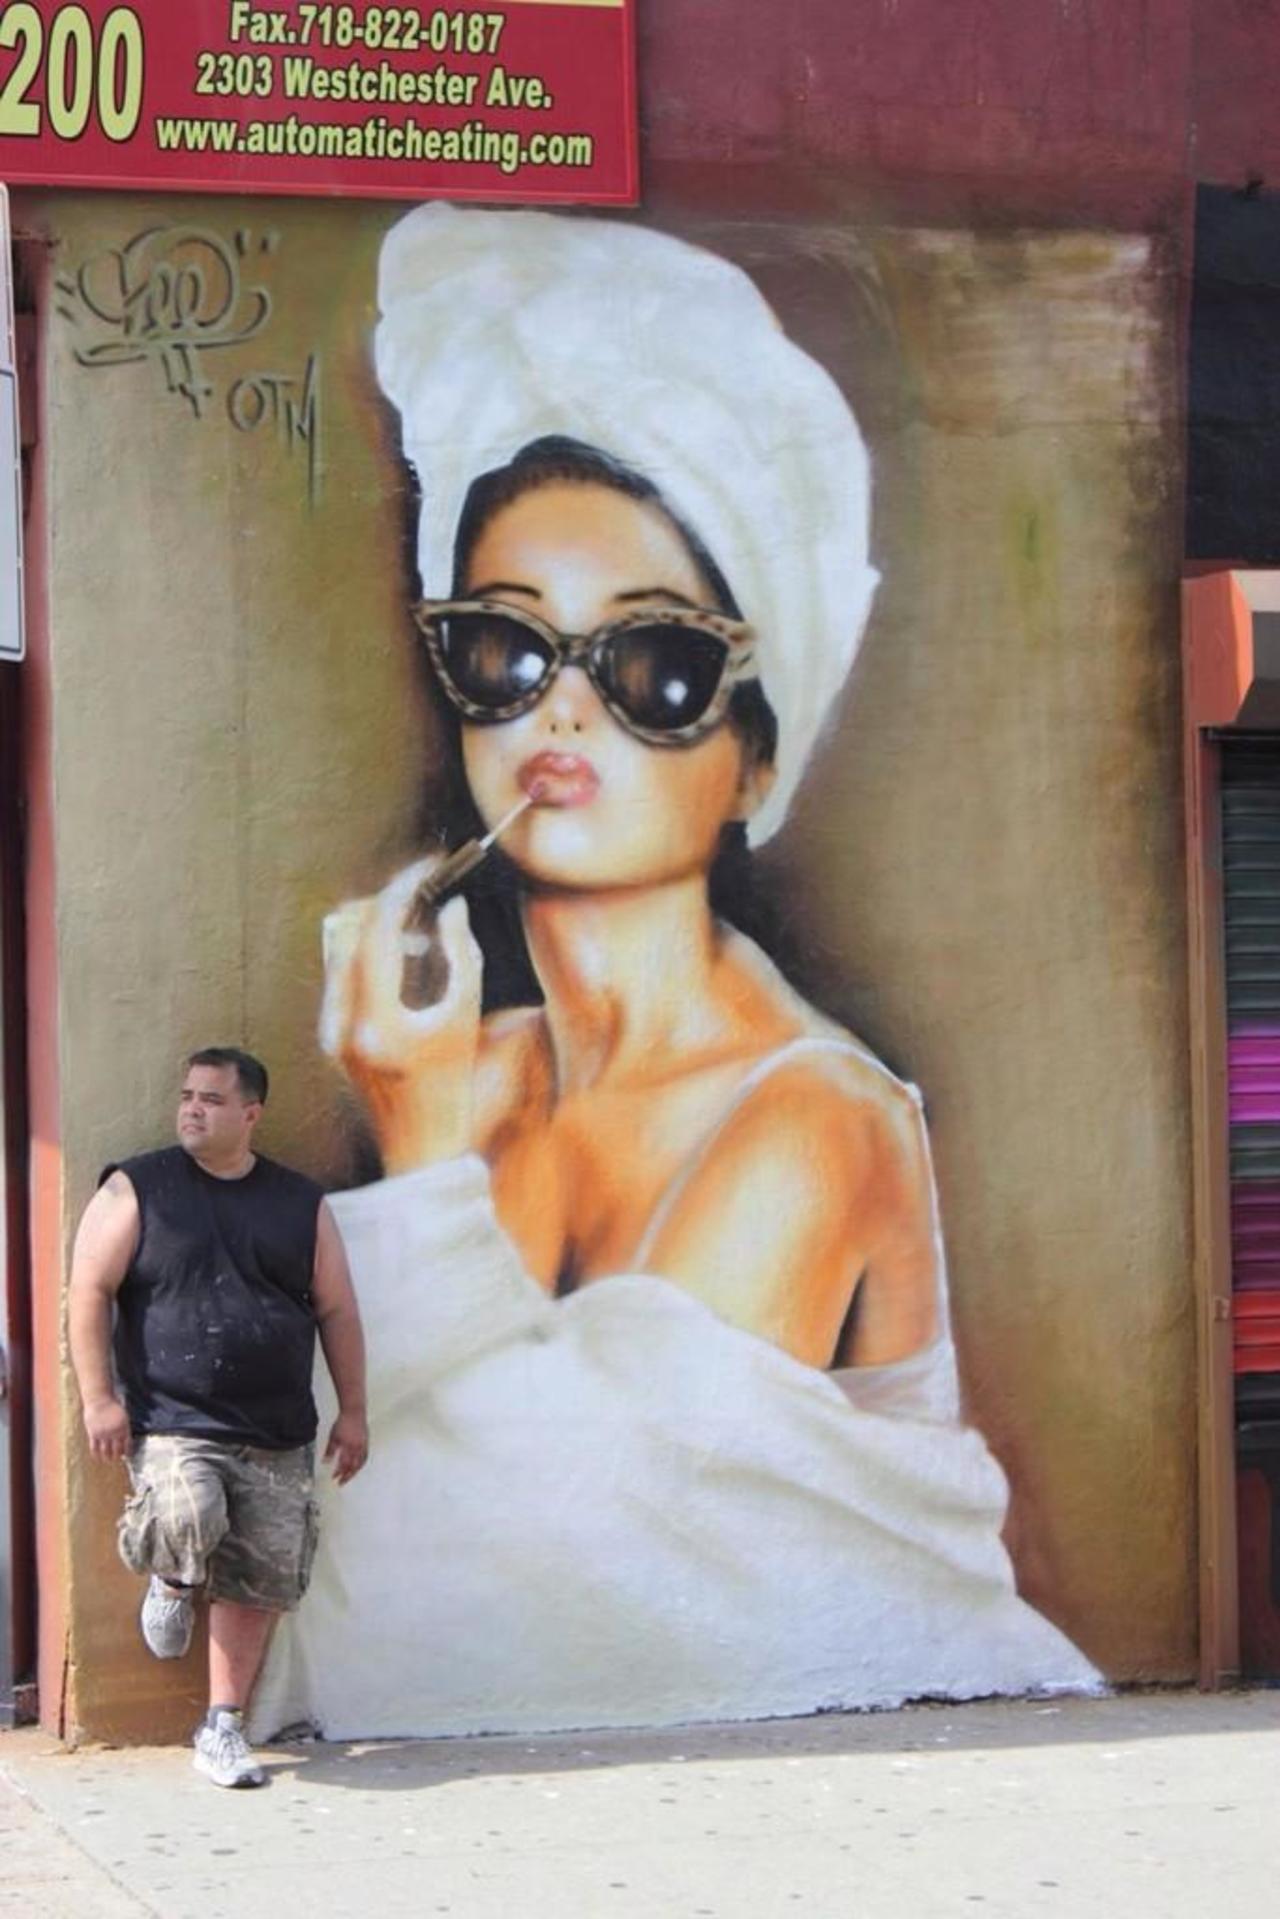 Artist 'see_tf' new Street Art portrait located in The Bronx, #NY #art #graffiti #mural #streetart http://t.co/kmGy8bM6Hb